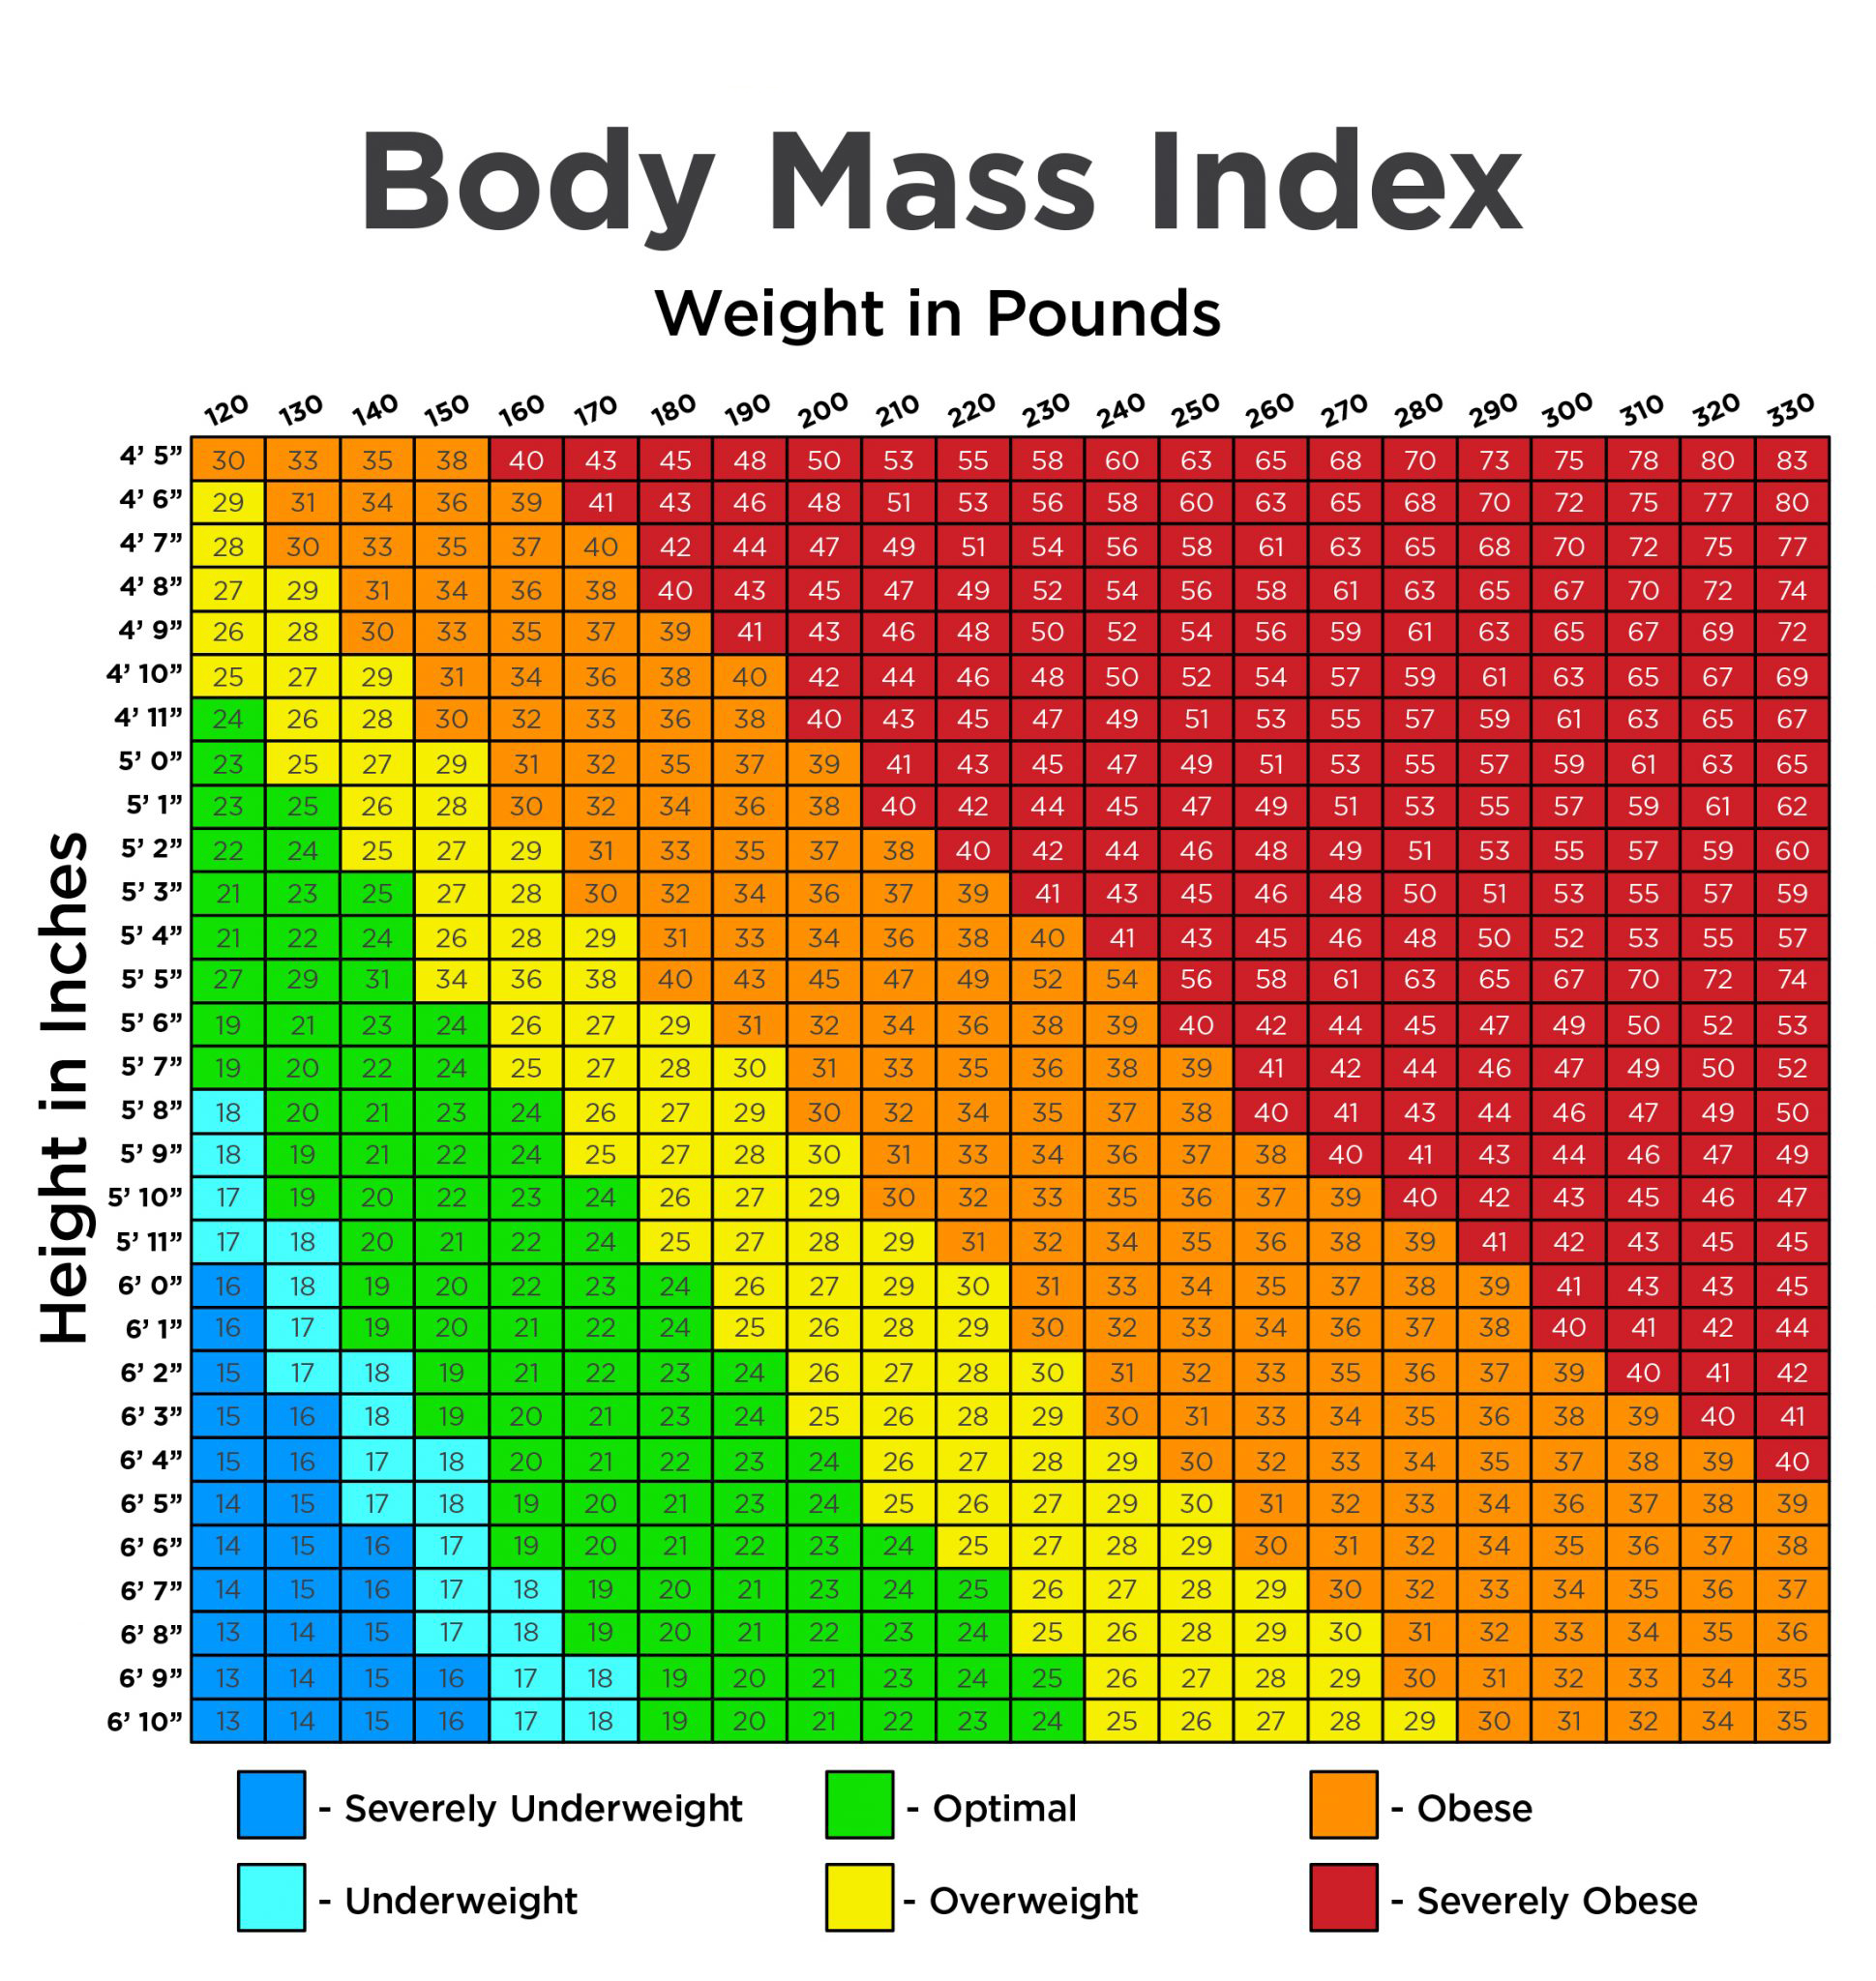 Normal Body Mass Index Range